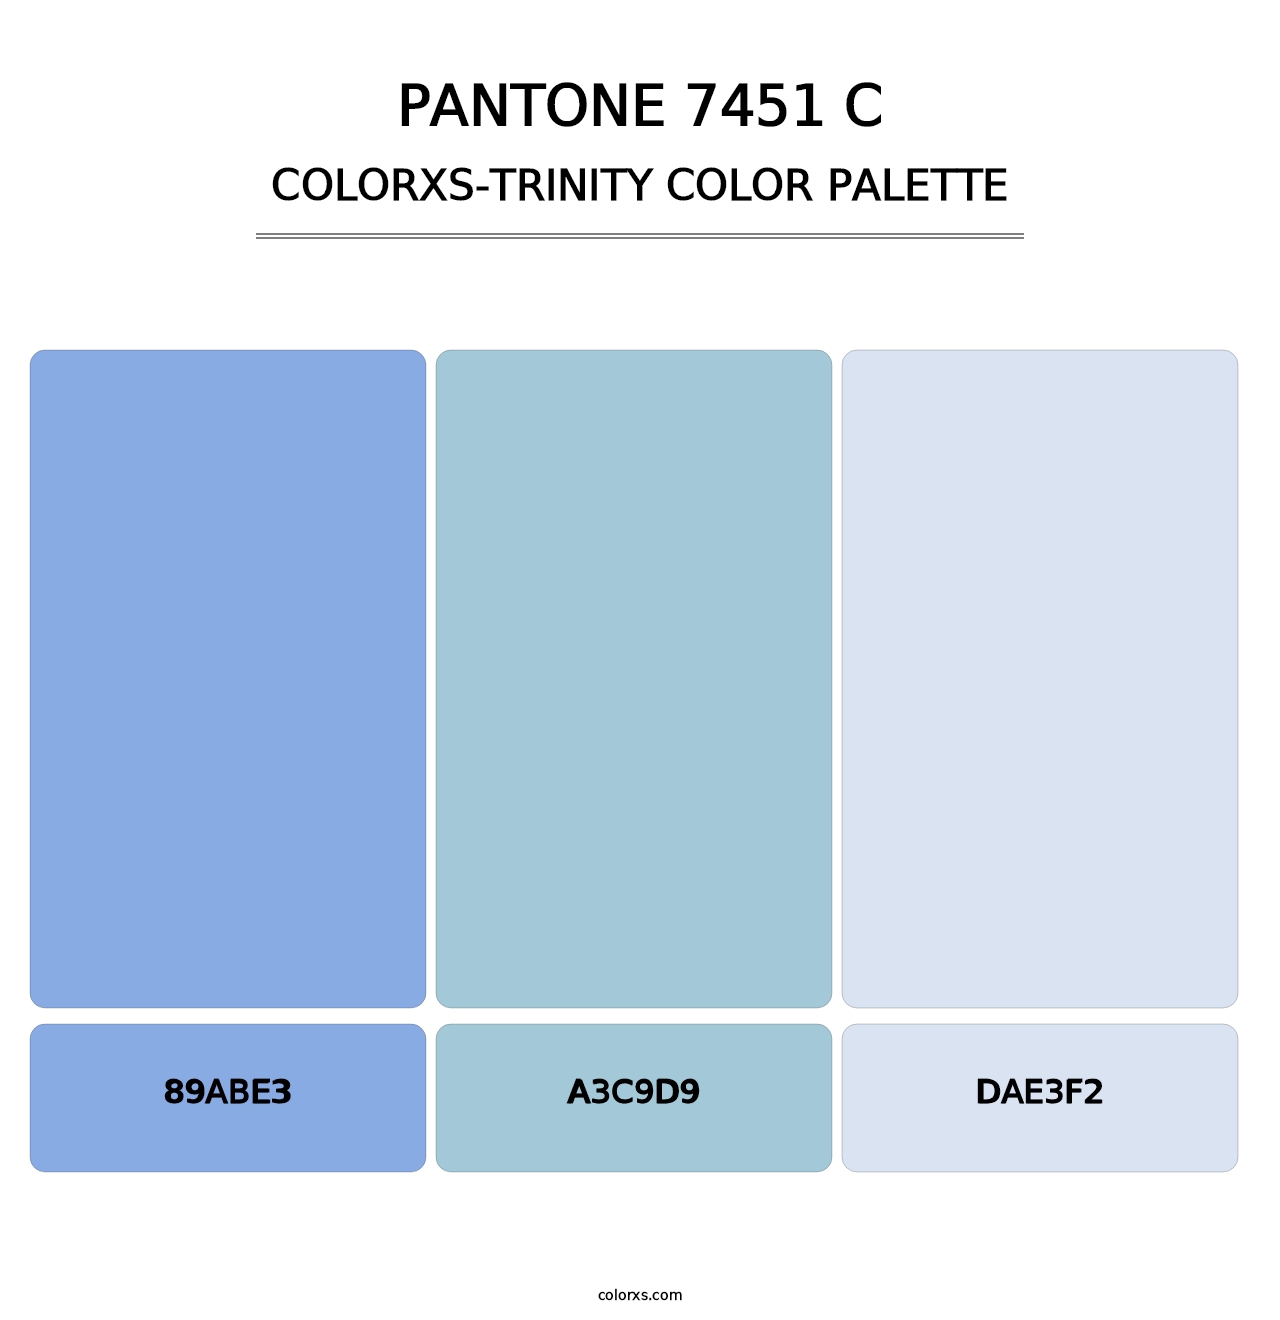 PANTONE 7451 C - Colorxs Trinity Palette